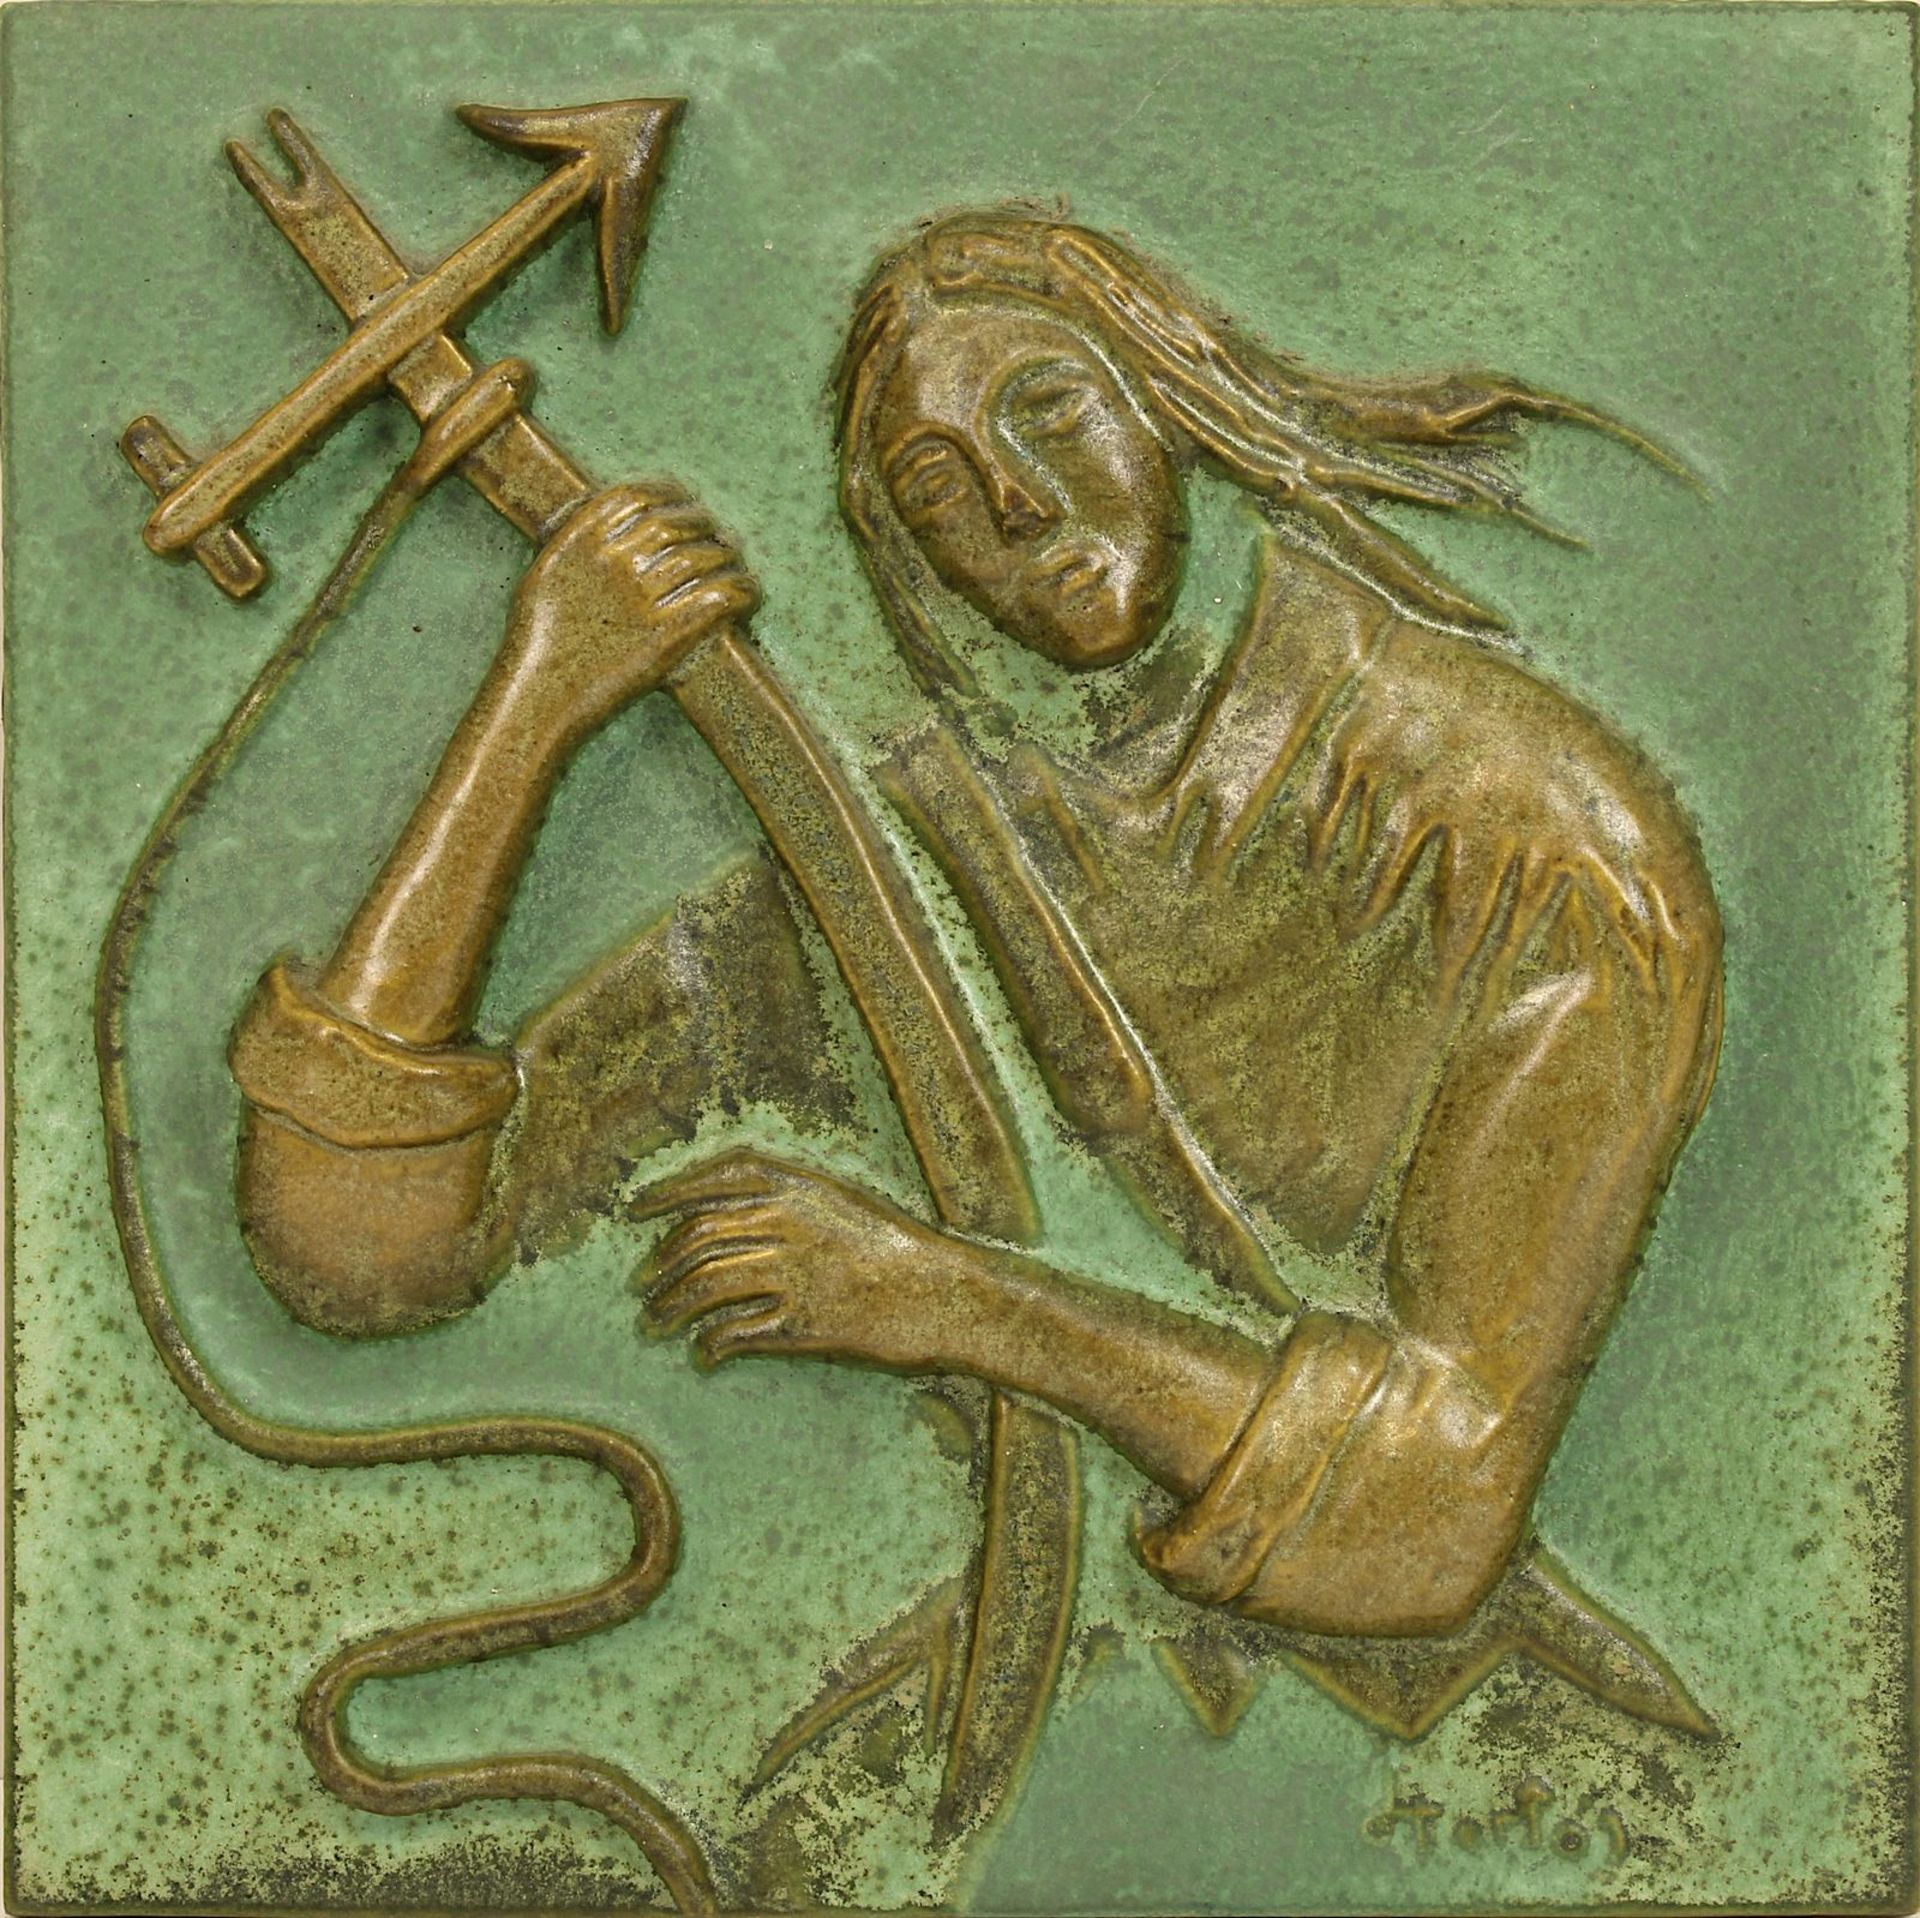 Keramik-Bildplatte "Schütze", Villeroy & Boch Mettlach, M. 20. Jh.,  Keramik ,weißer Scherben, in